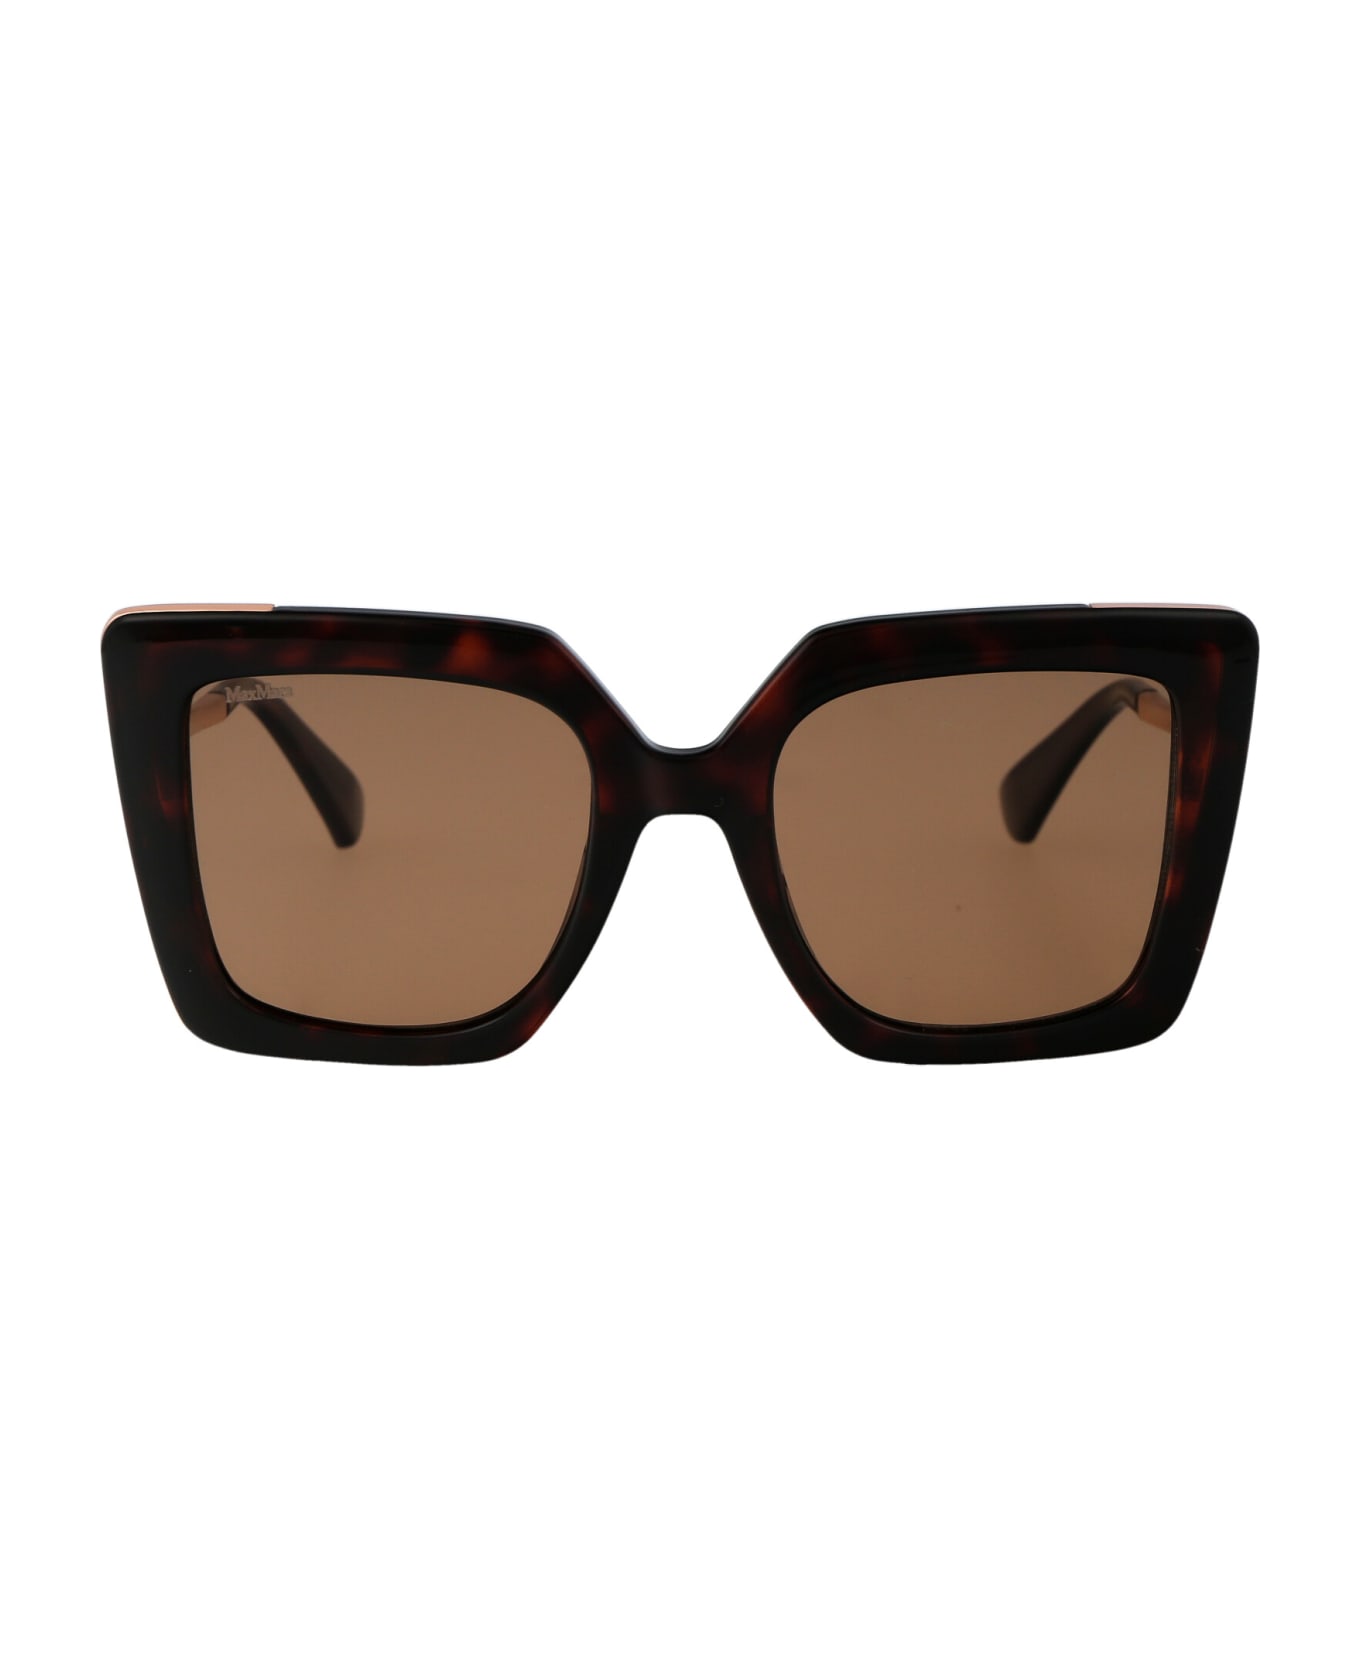 Max Mara Design4 Sunglasses - 54S Avana Rossa/Bordeaux